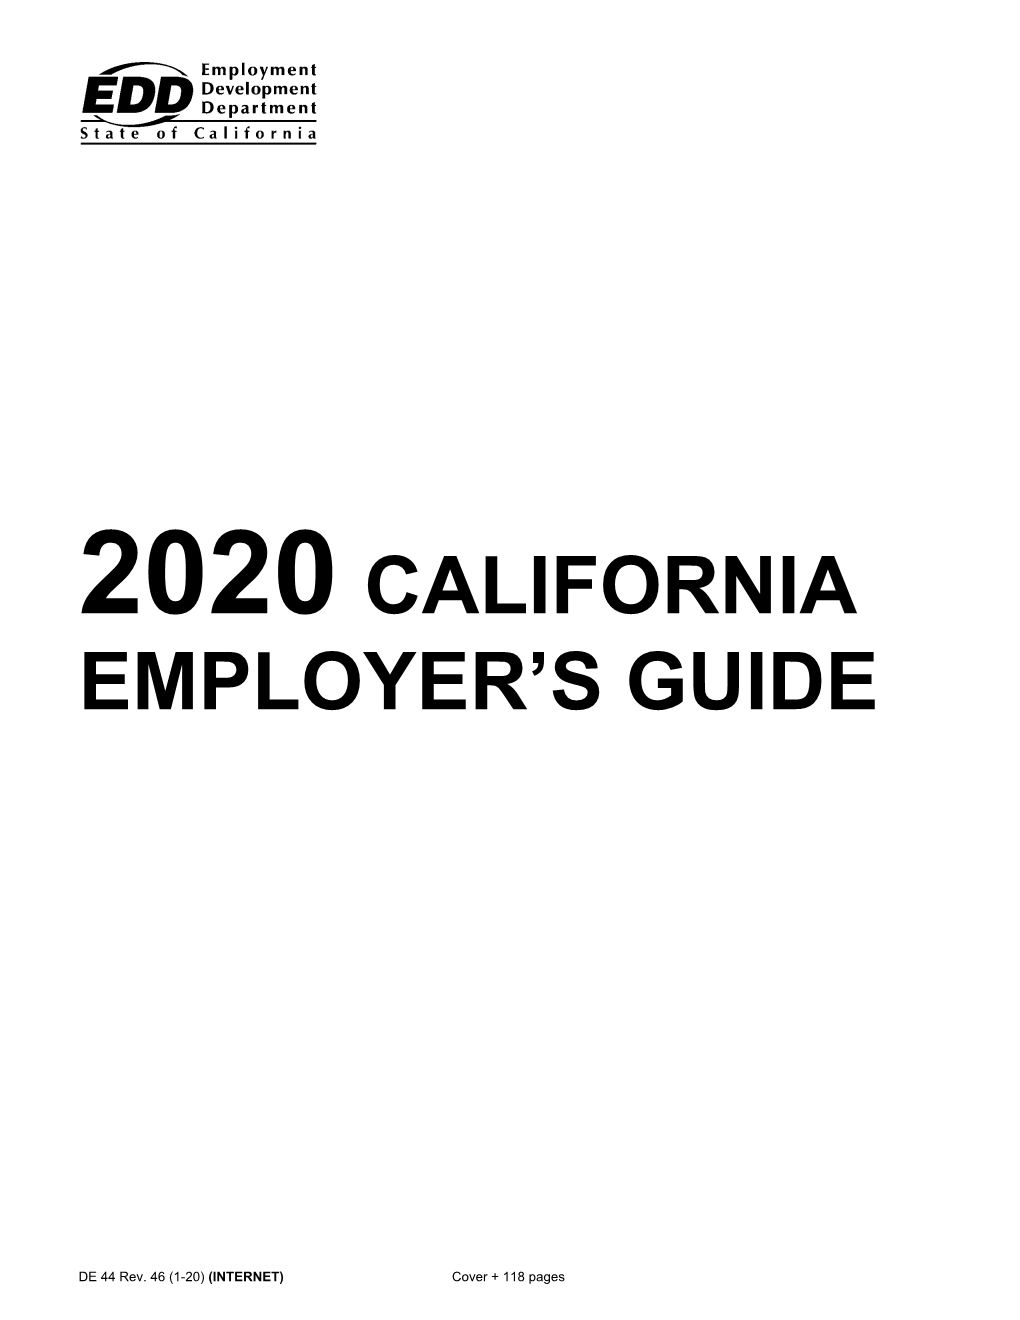 2020 California Employer's Guide